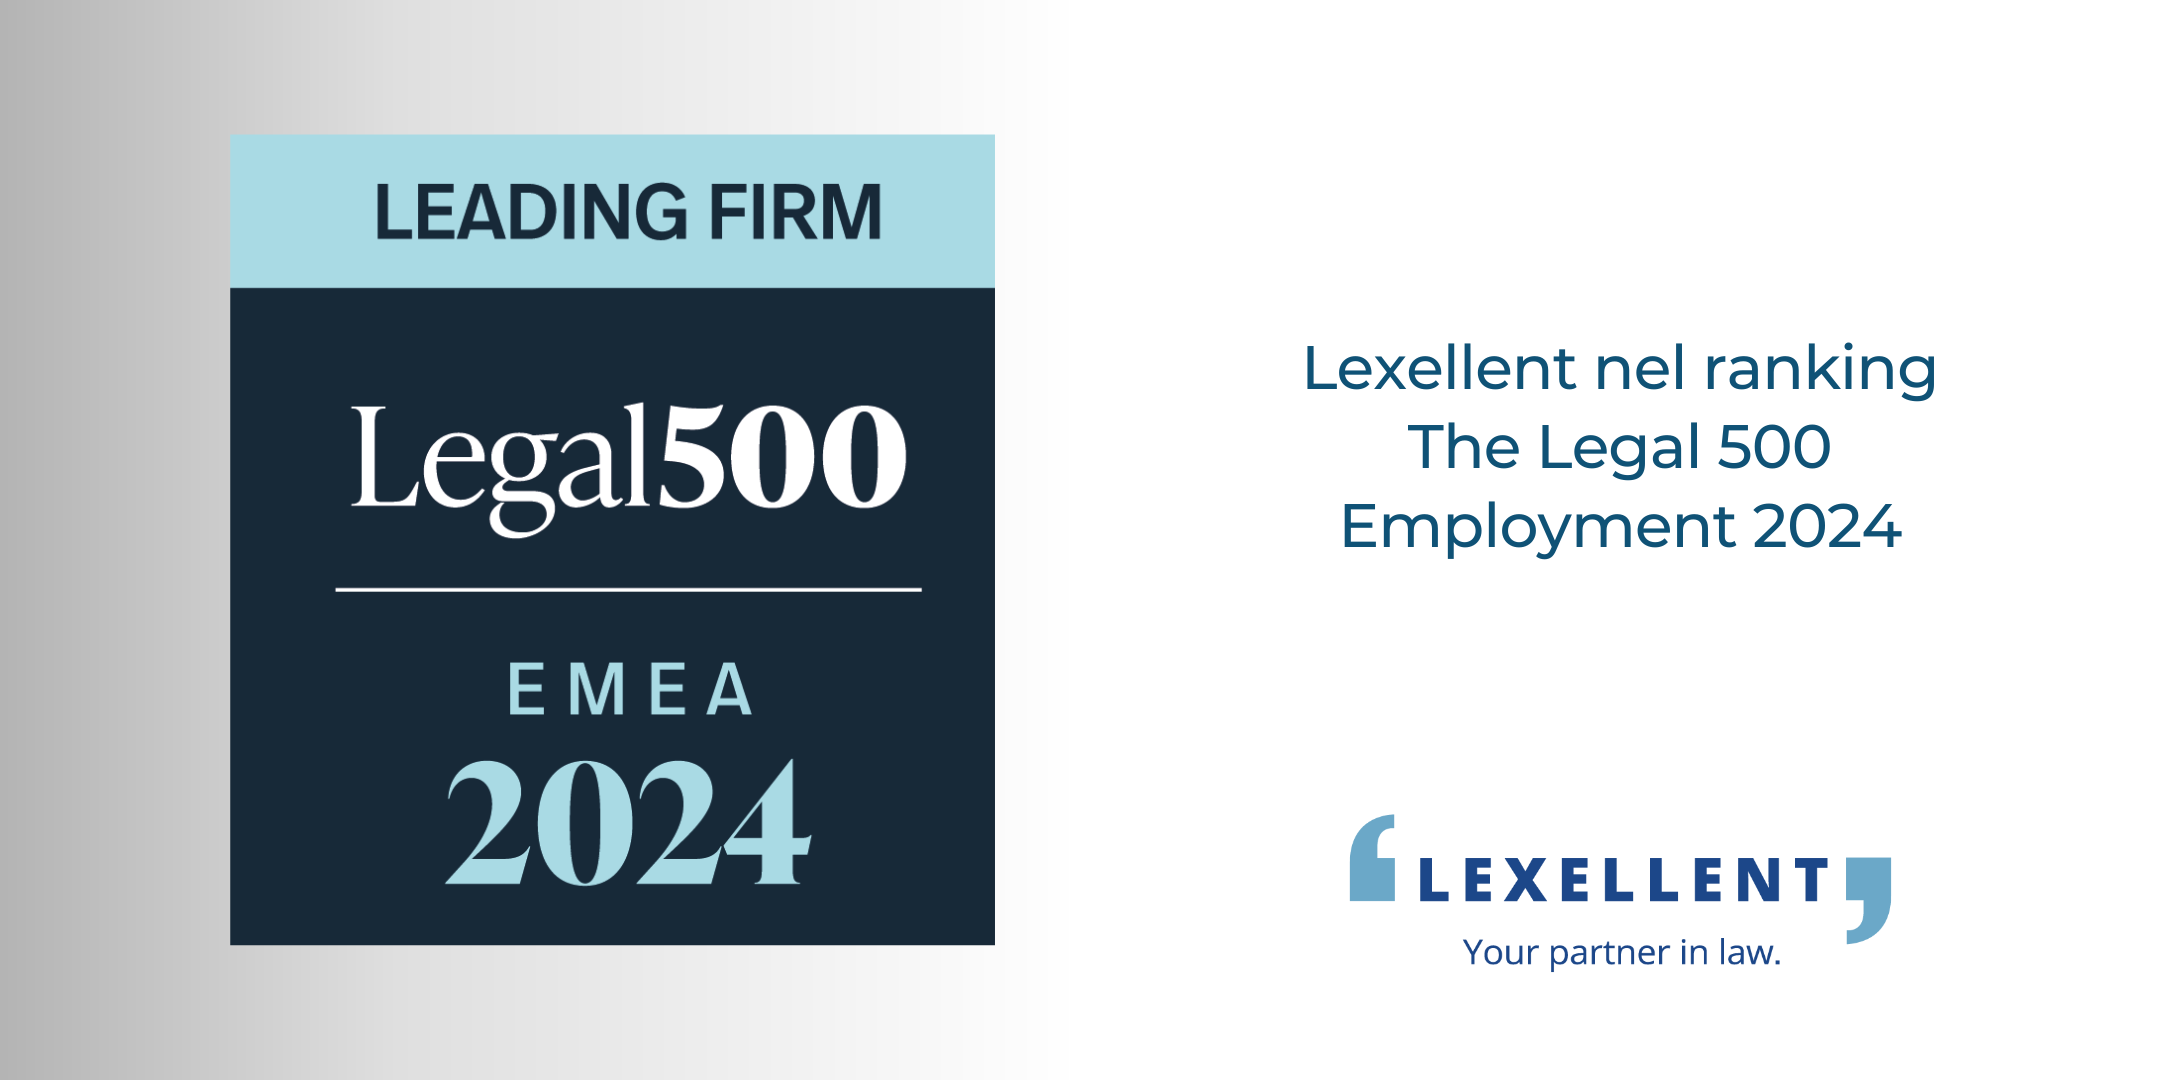 Lexellent nel ranking The Legal 500 Employment 2024